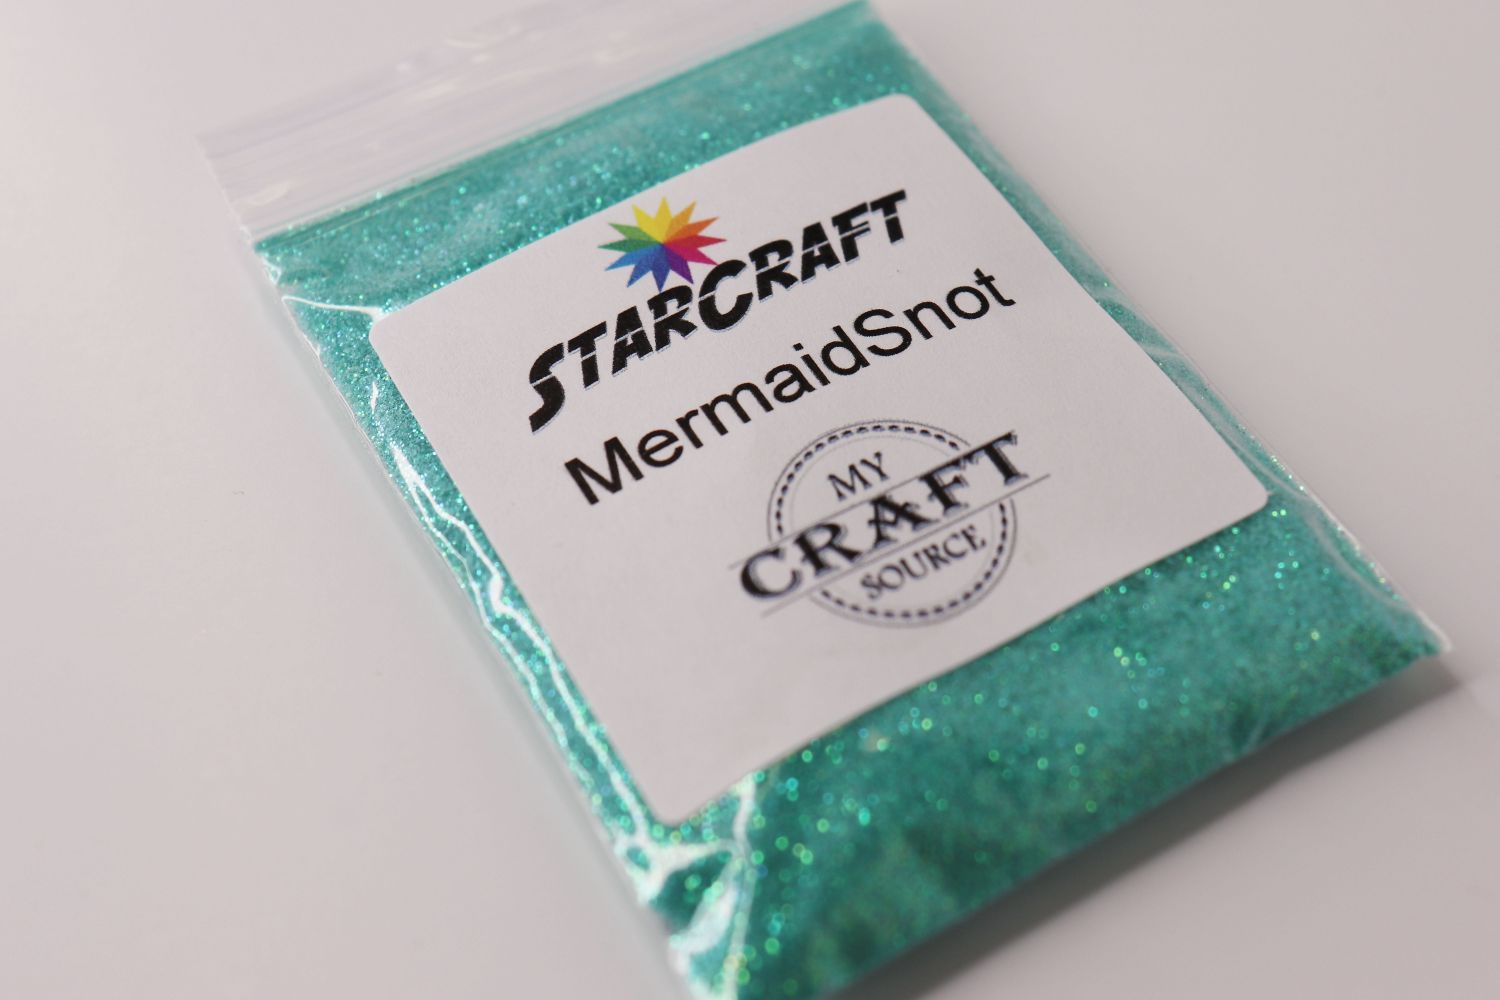 StarCraft Metallic Glitter - Mermaid Snot - 0.5 oz